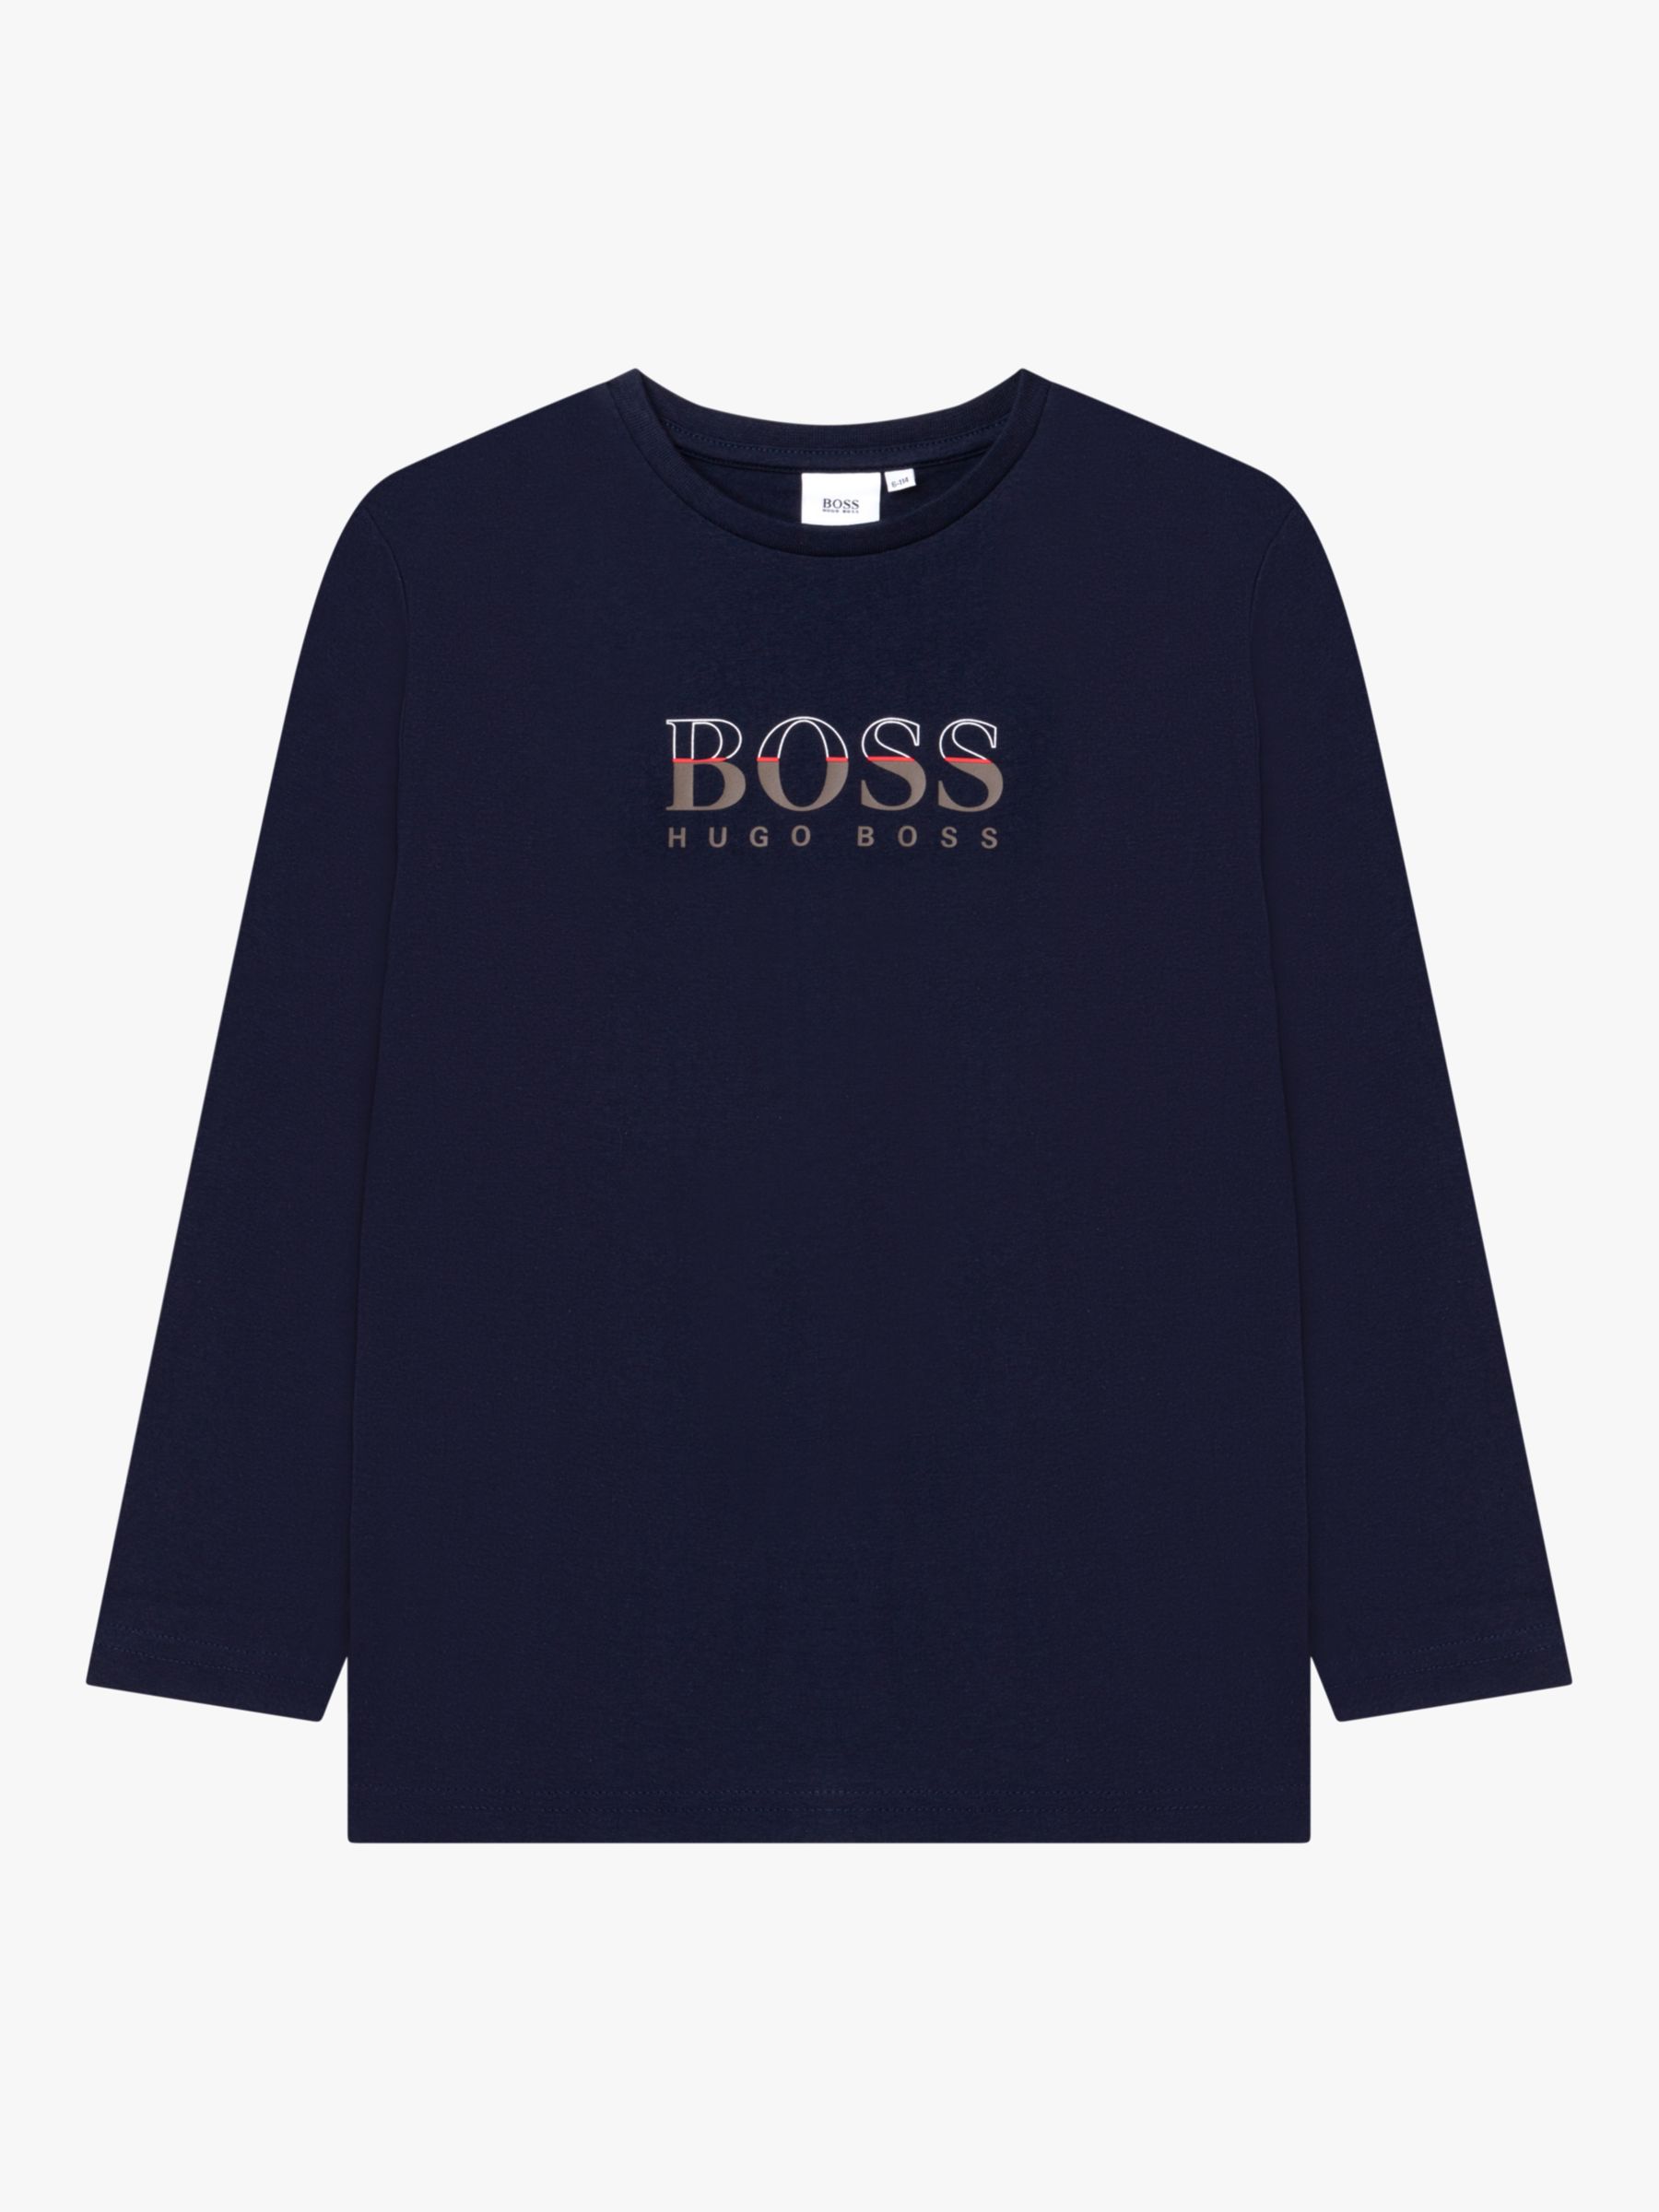 HUGO BOSS Kids' Two Tone Logo Jersey Top